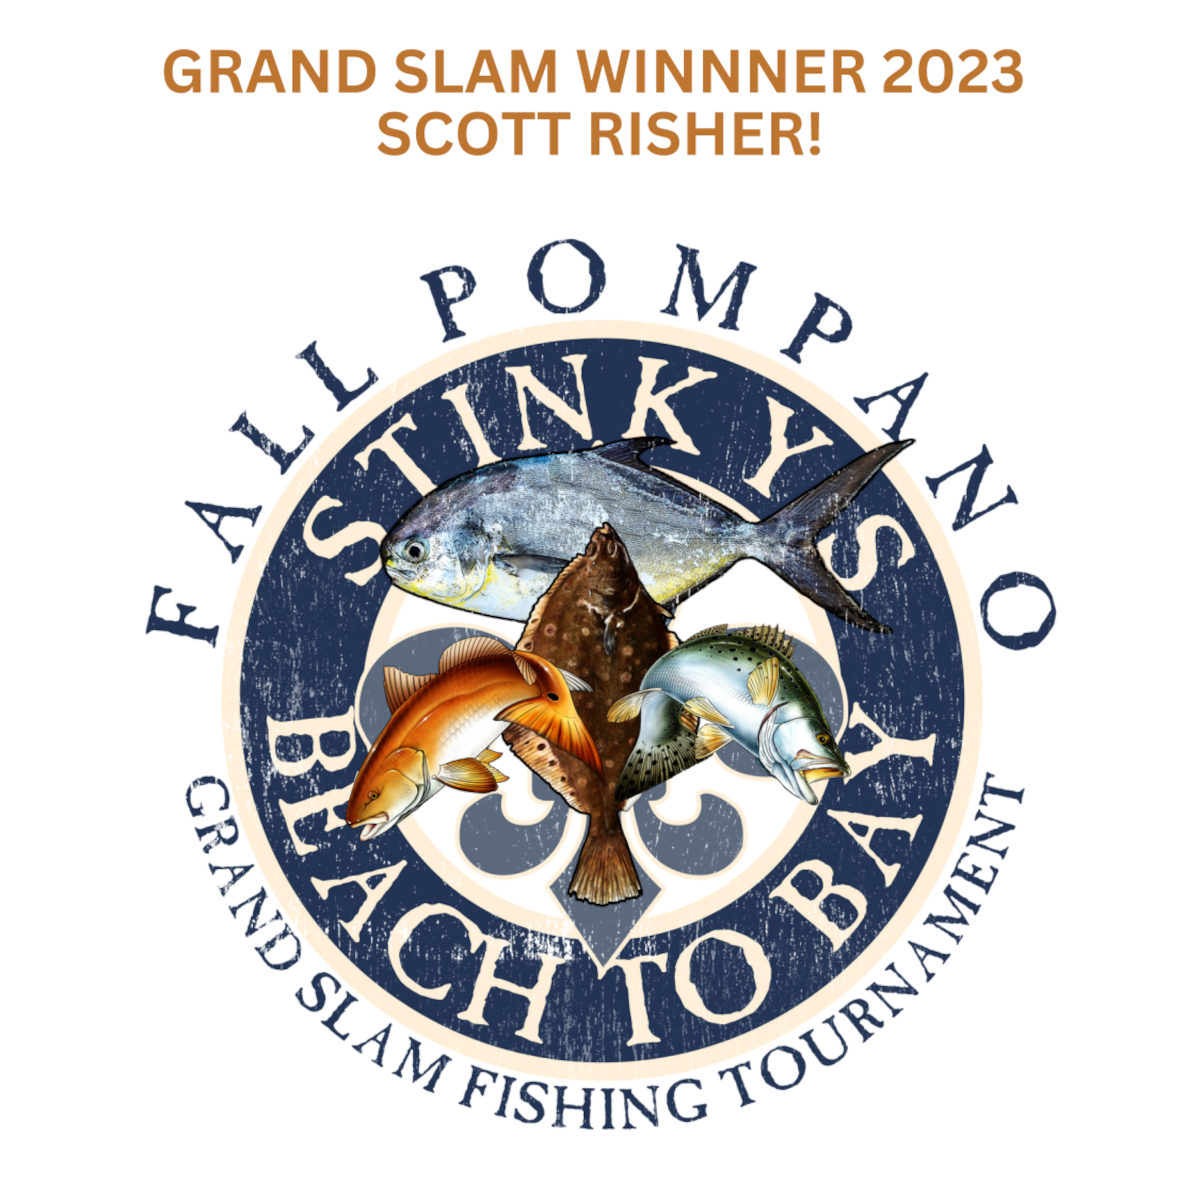 Grand slam fishing tournament poster